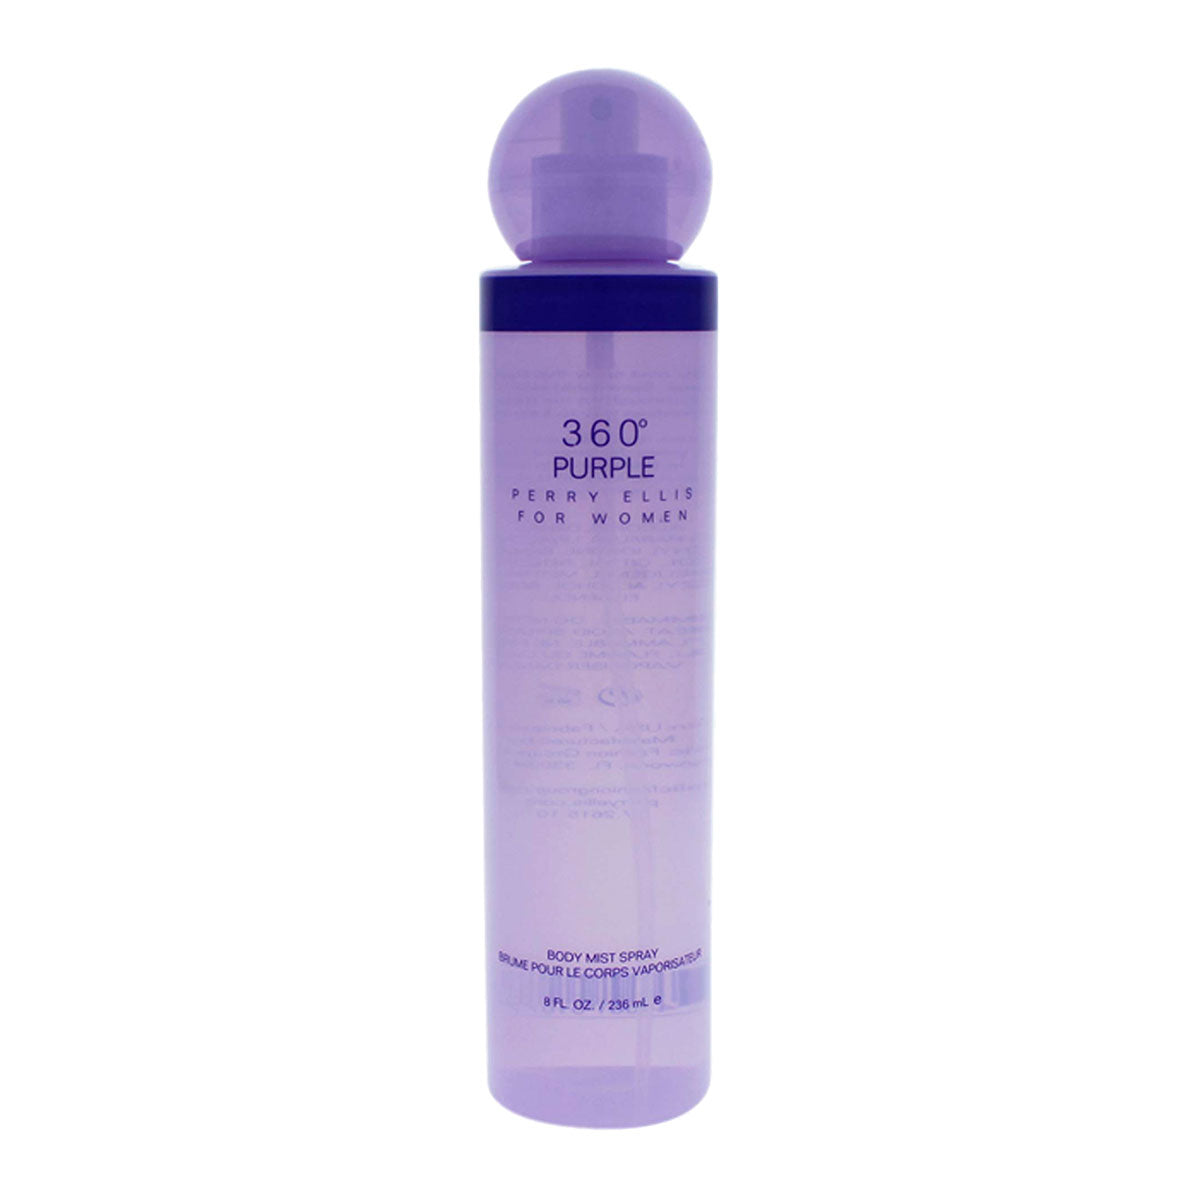 Perry Ellis 360 Purple For Women Body Mist Spray 236 ml